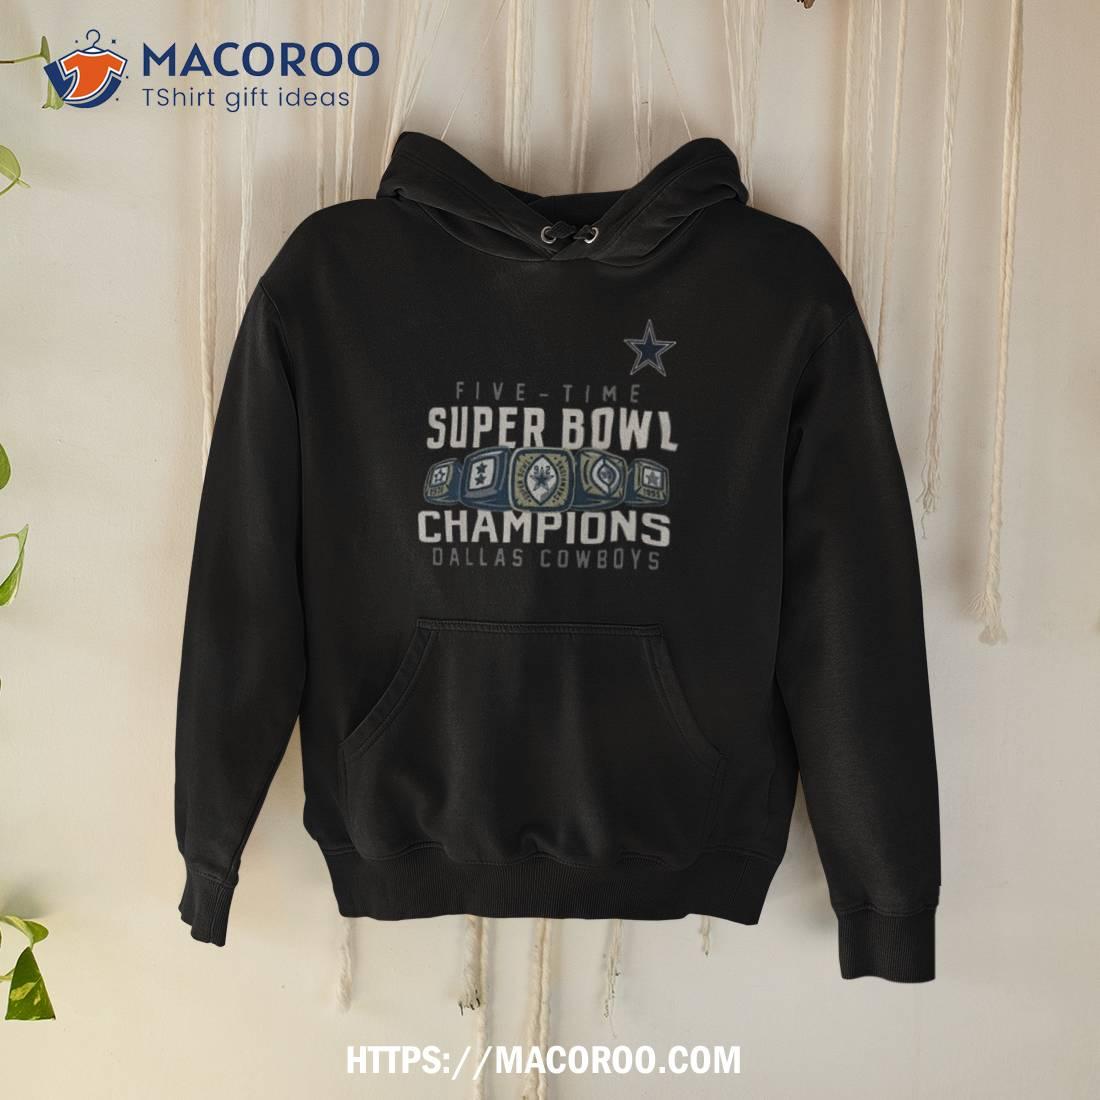 Champions super bowl five time Dallas Cowboys shirt, hoodie